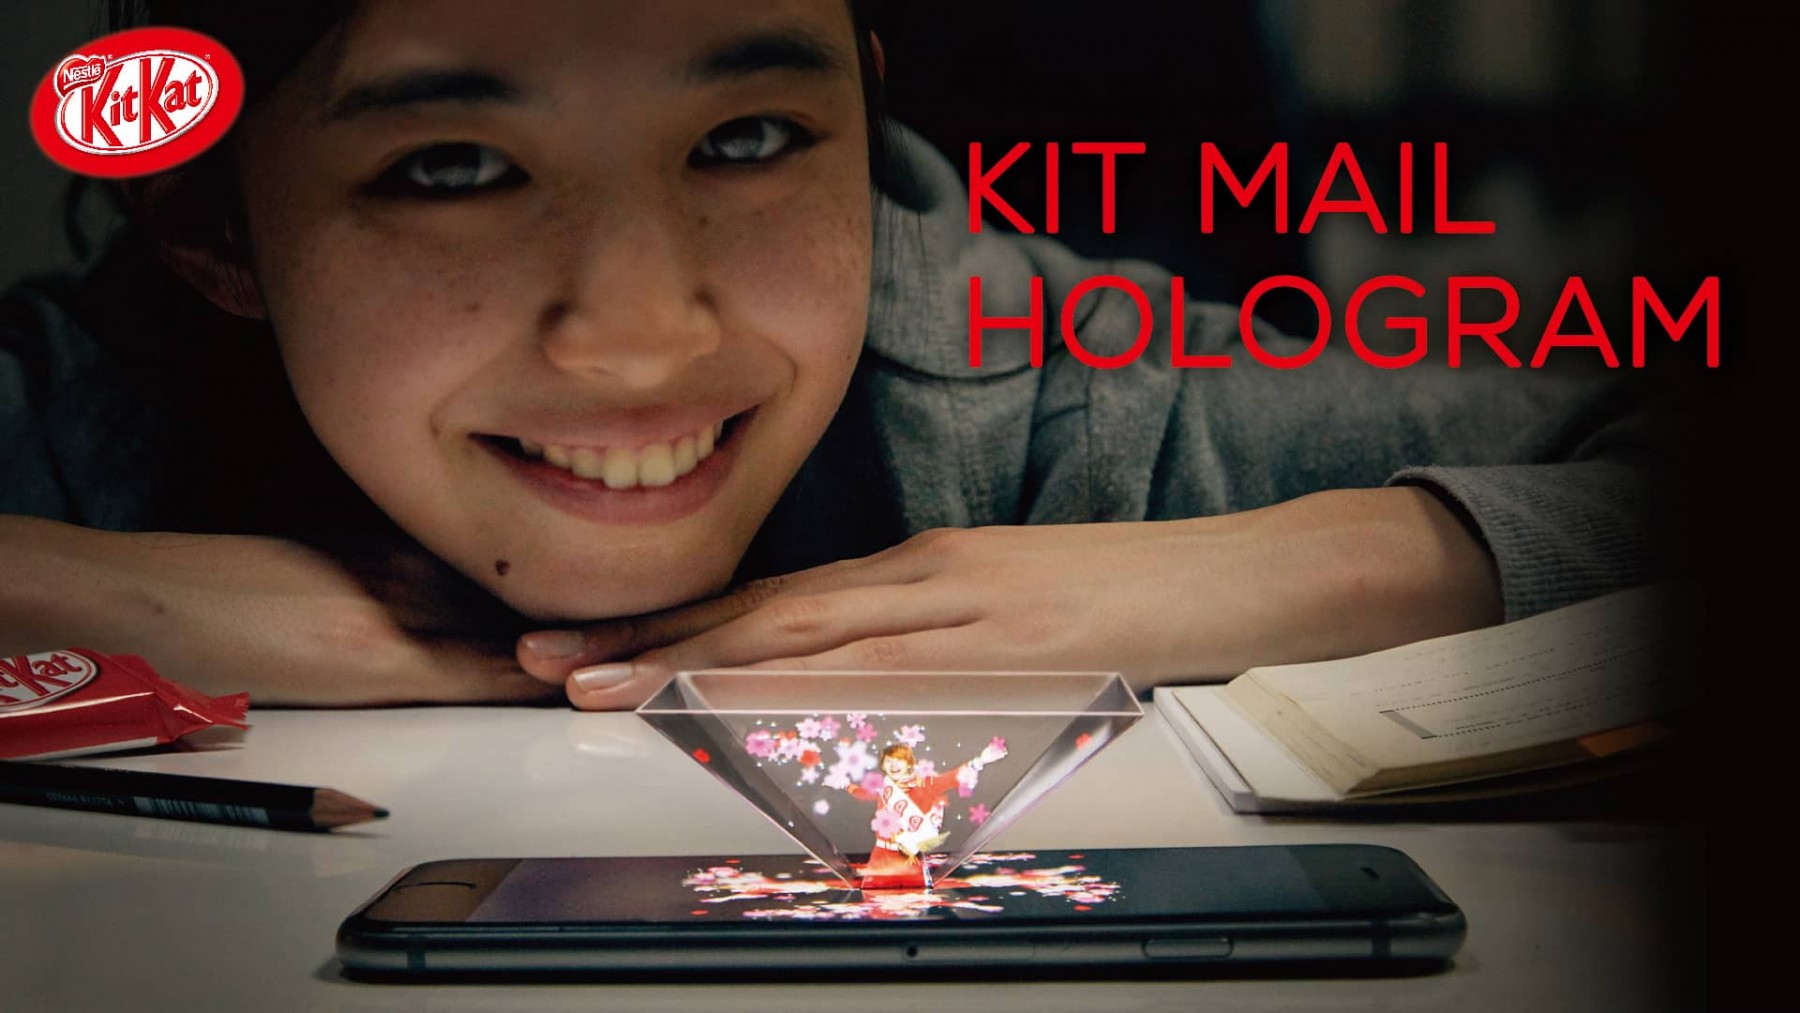 Kit Mail Hologram